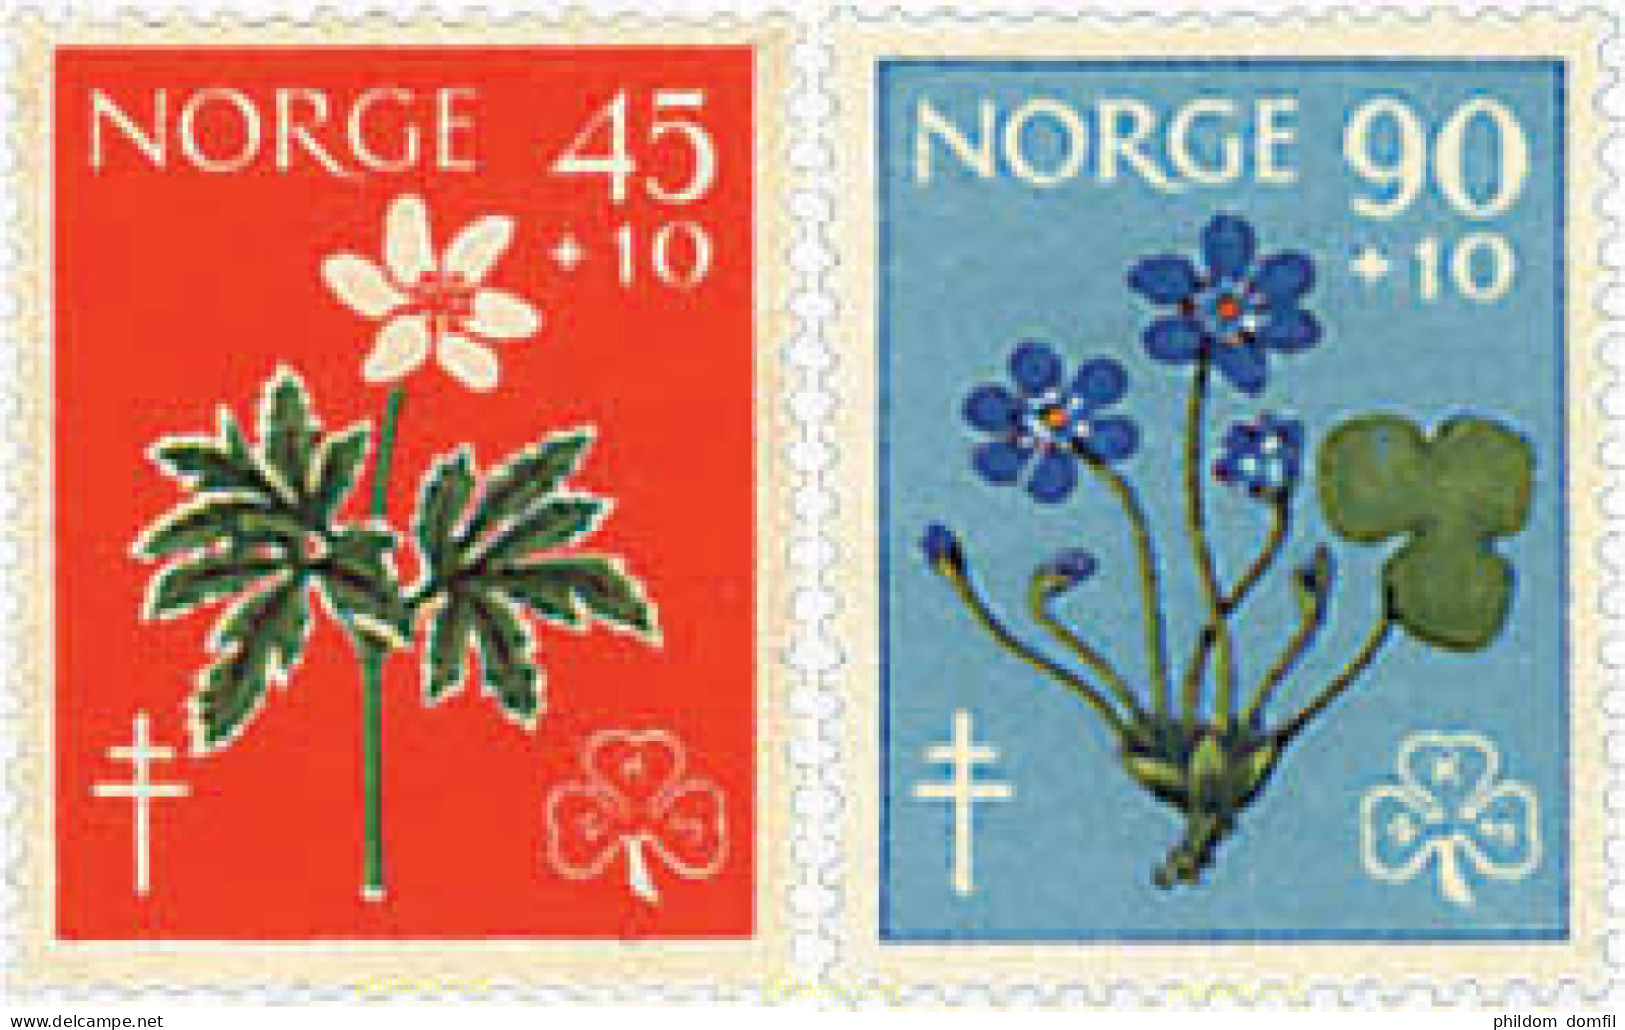 672771 HINGED NORUEGA 1960 ANTITUBERCULOSIS - Used Stamps